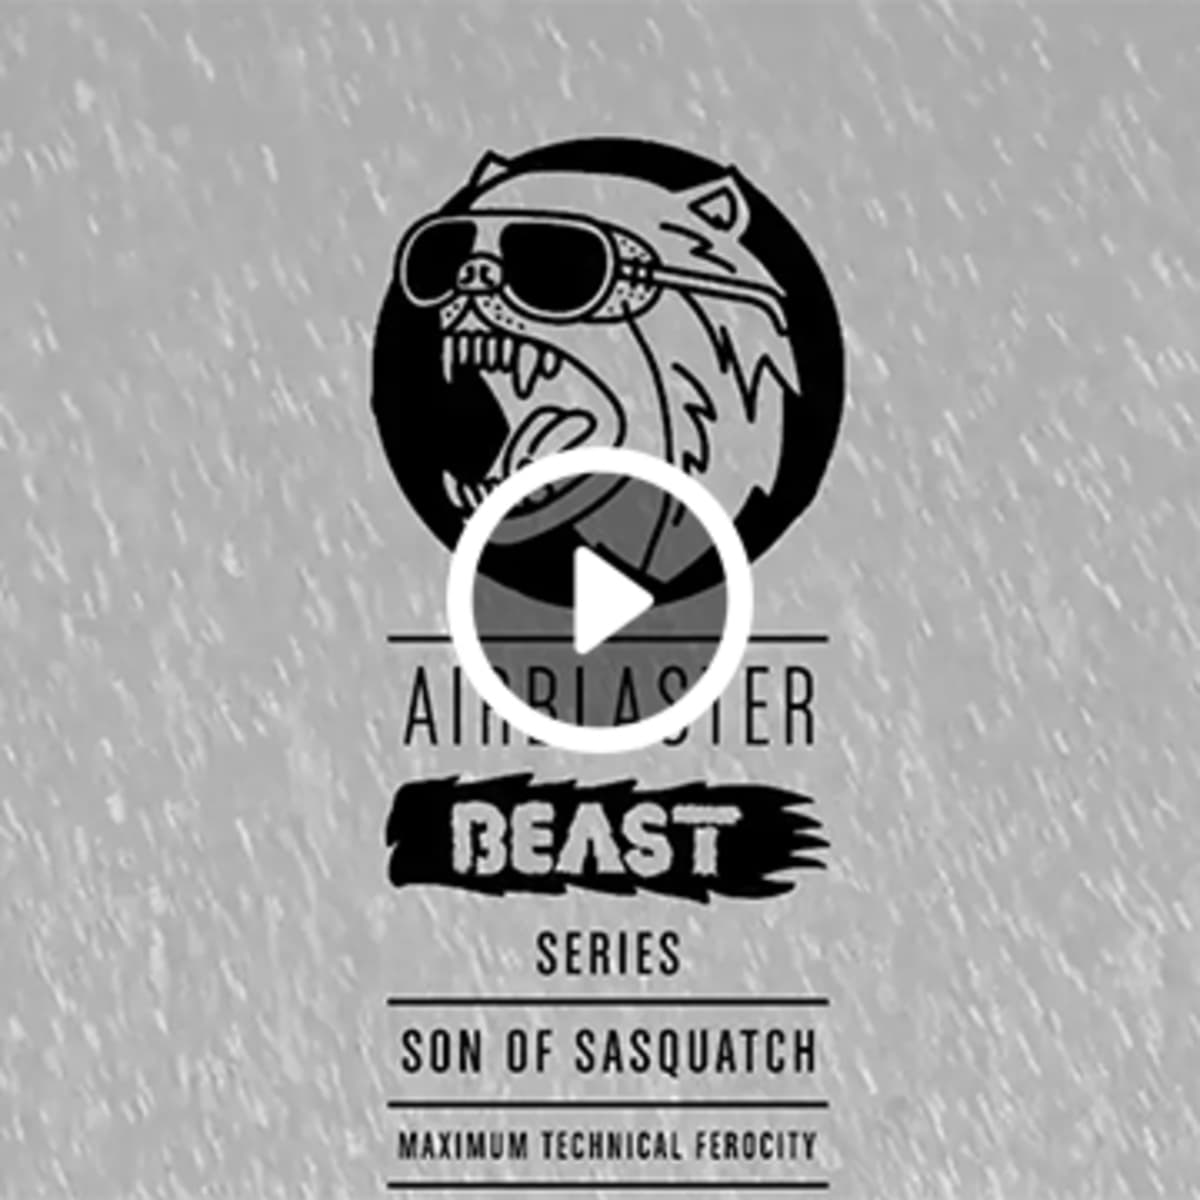 Full Throttle Storm Puncher: Airblaster Beast Series - Snowboarder